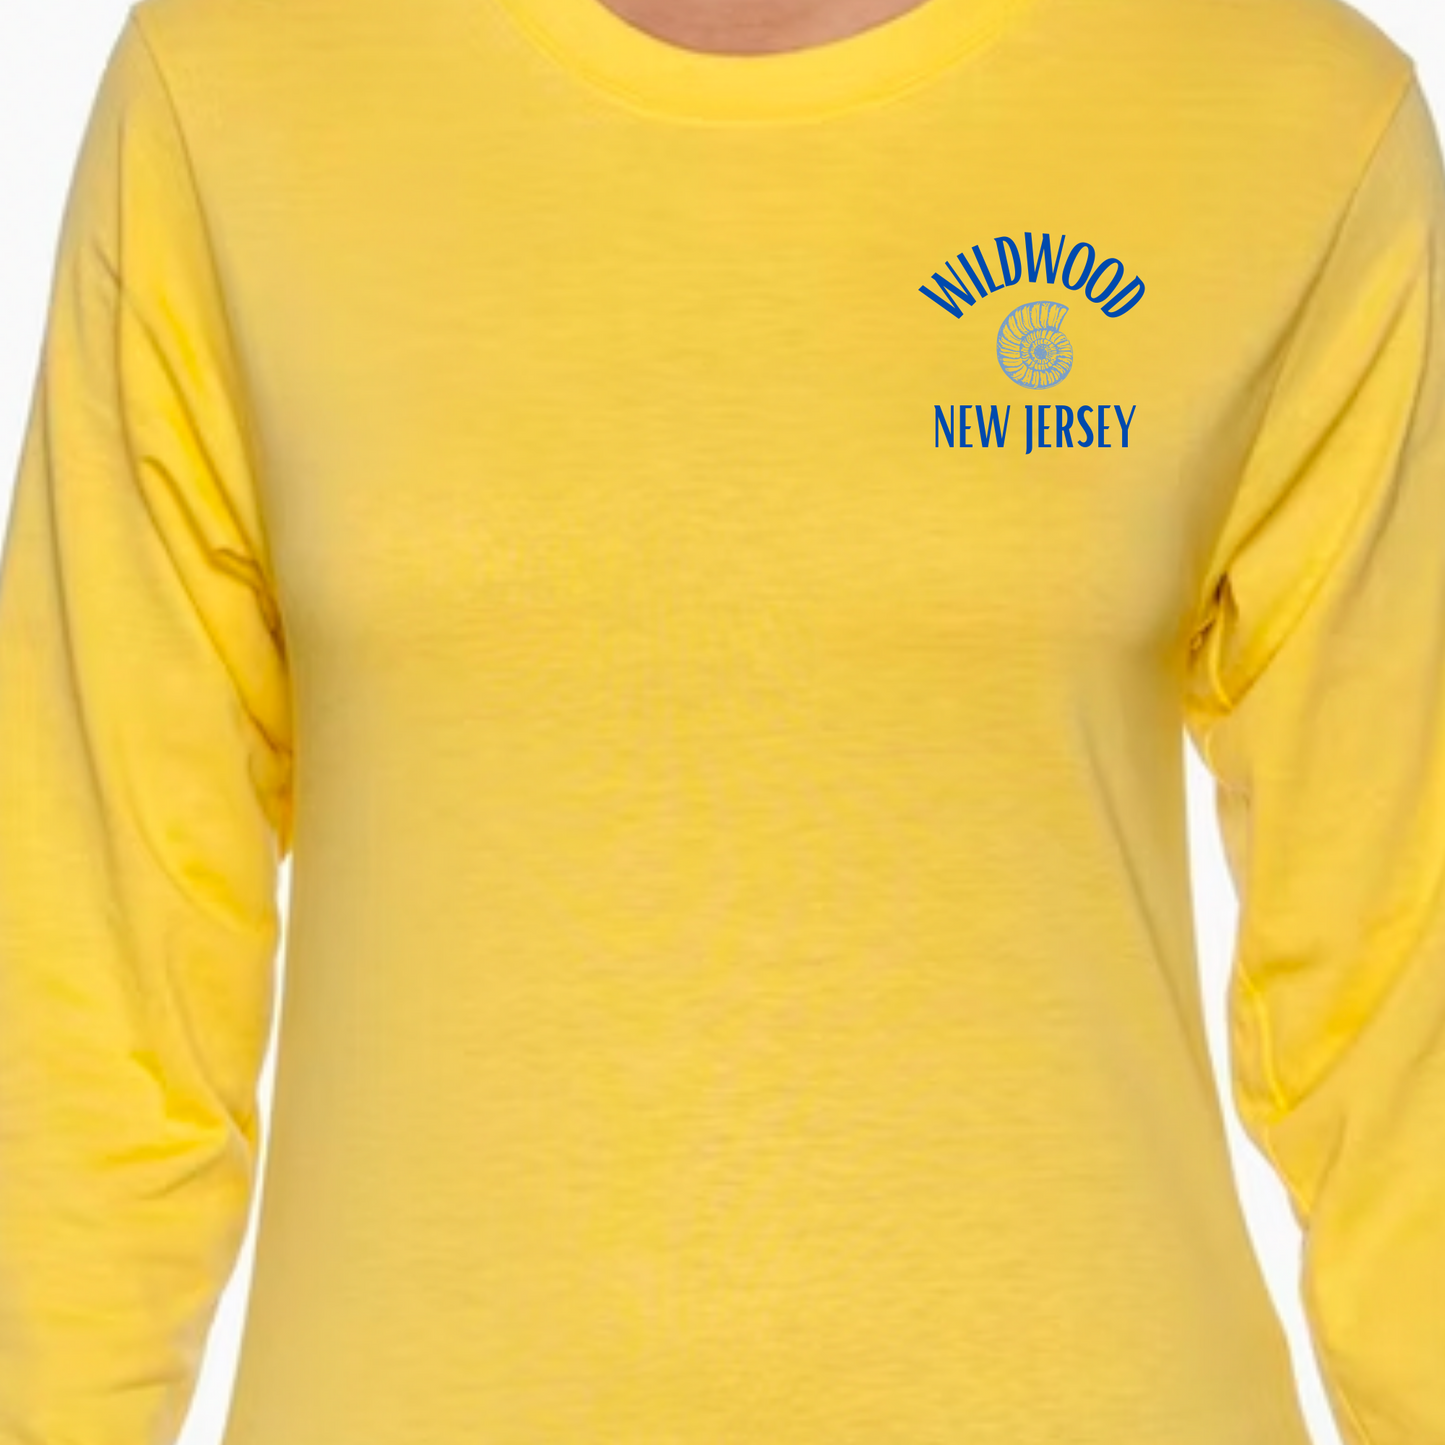 Wildwood NJ Seashell Long Sleeve T Shirt